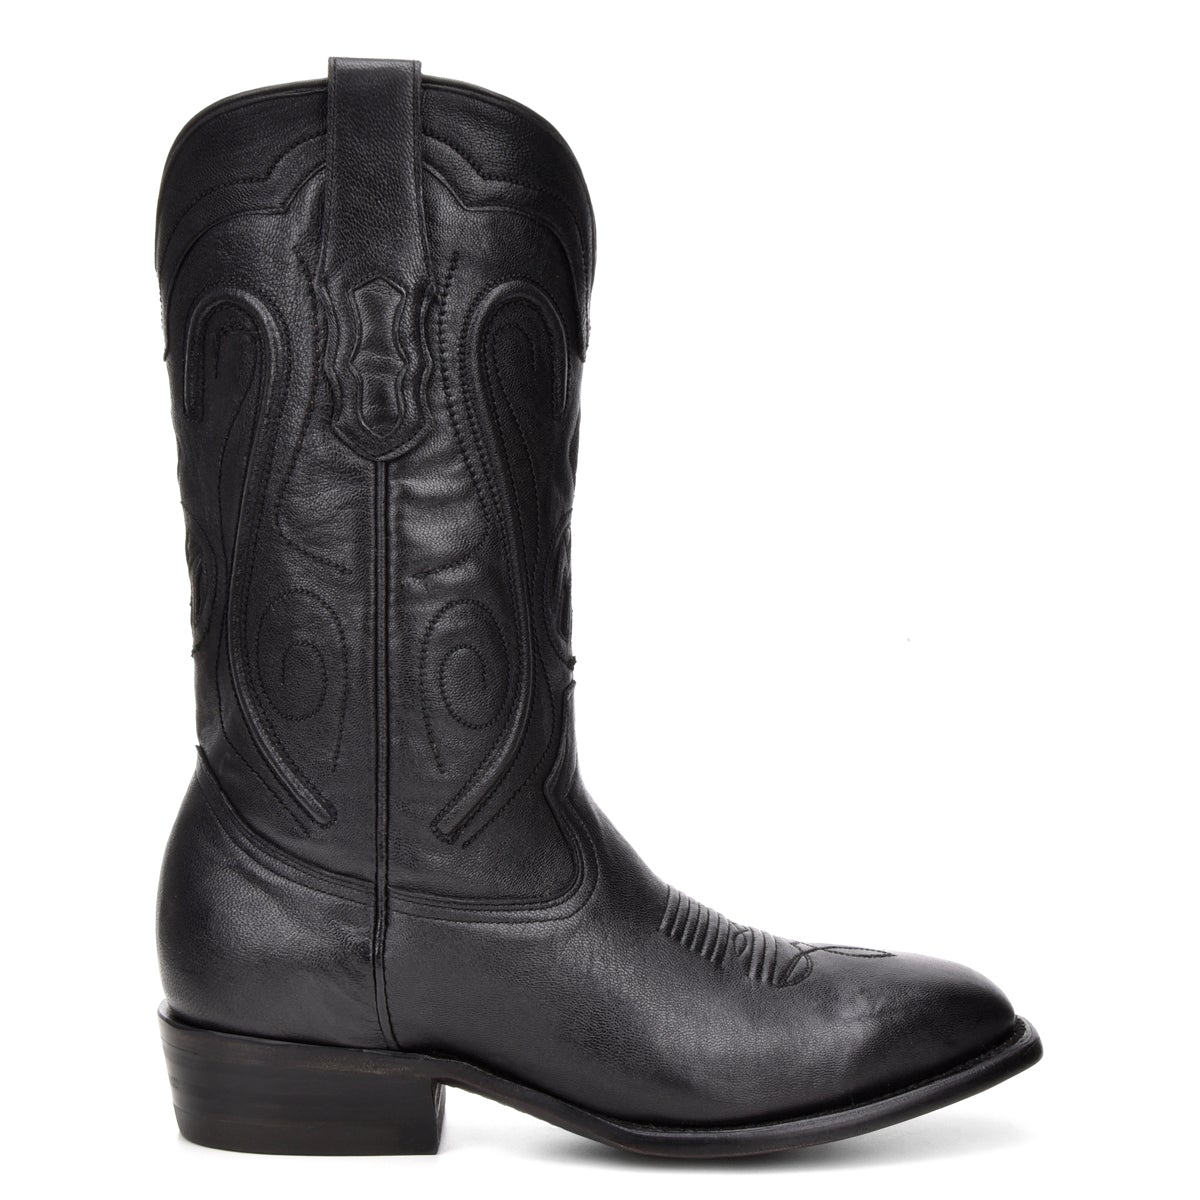 Montana black dress cowboy cowhide boots for men – Kuet.us